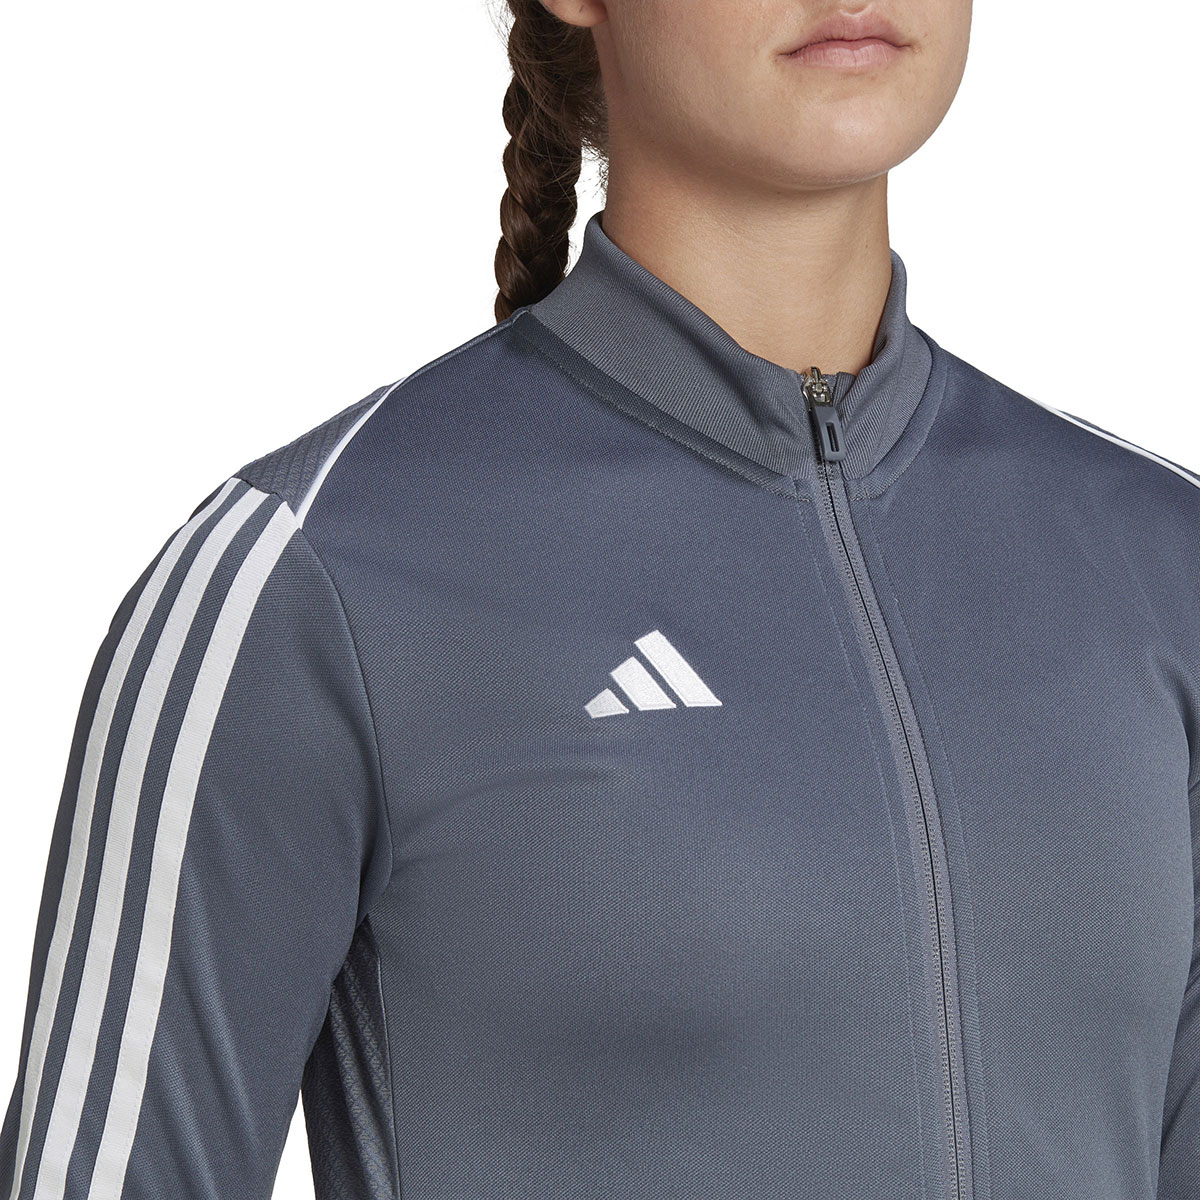 Adidas Damen Trainingsjacke Tiro 23 grau